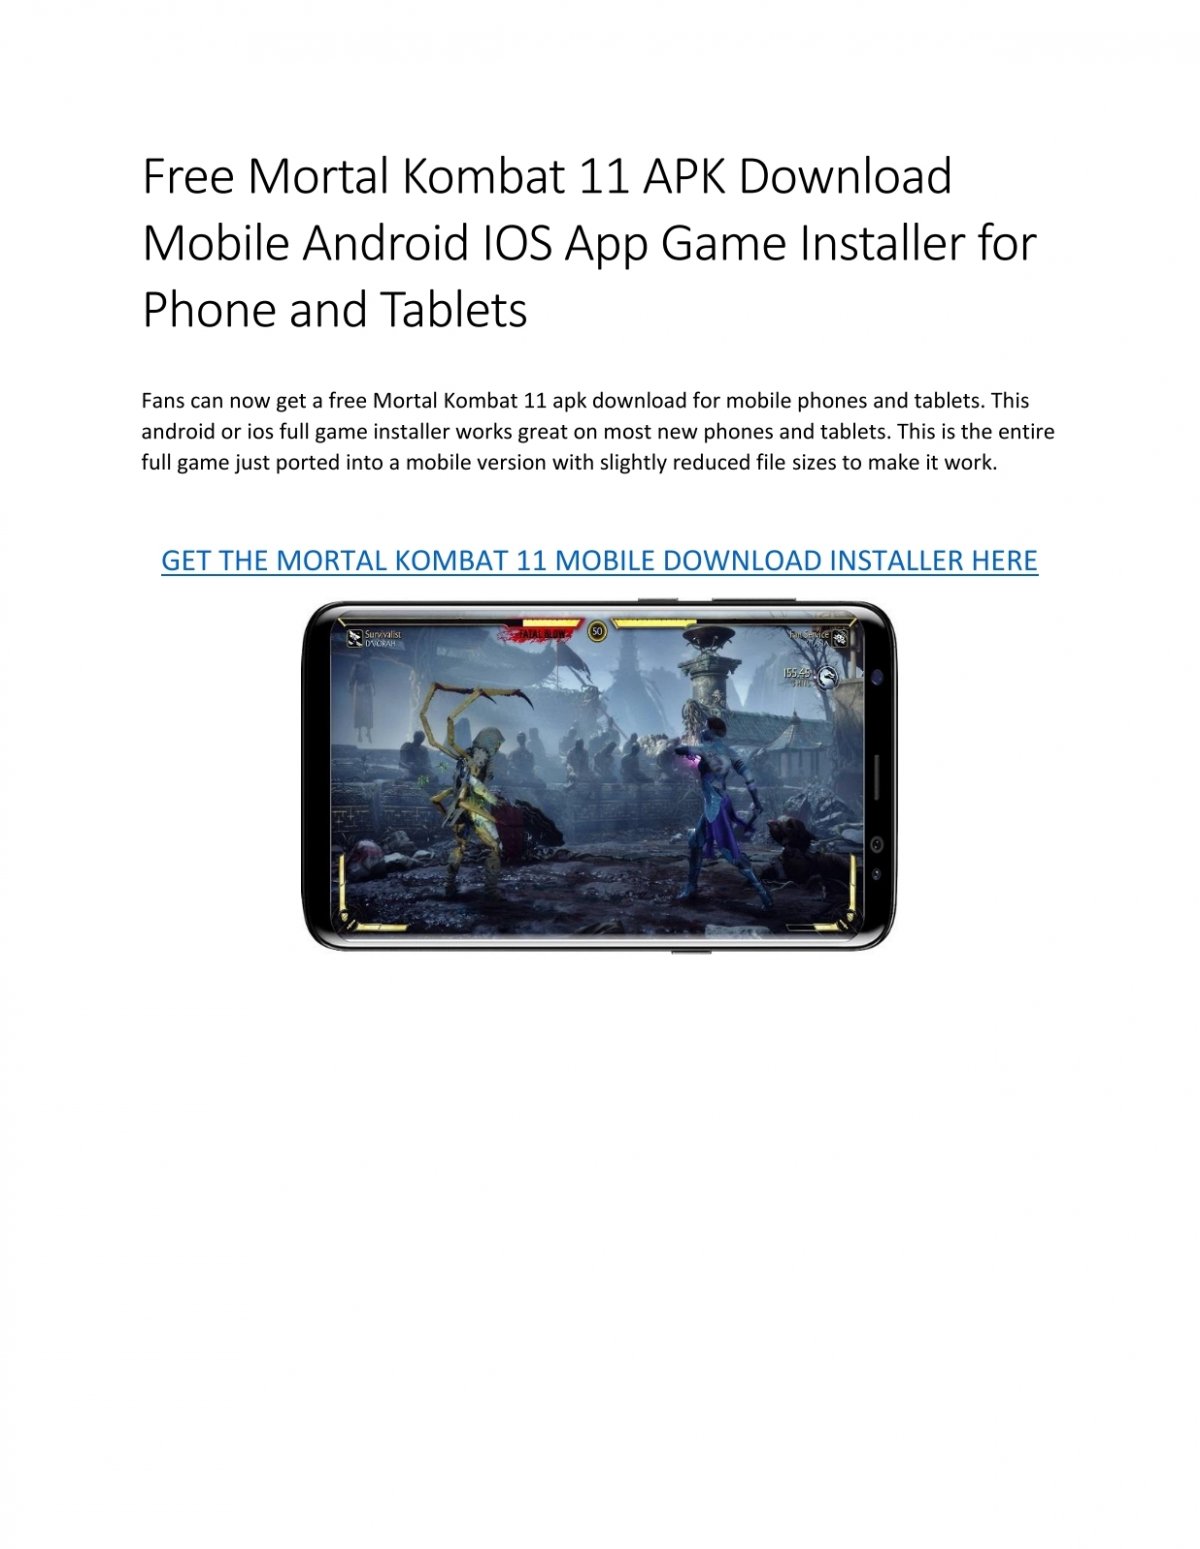 Mortal Kombat 11 Apk + OBB / Data for Android. [April 2019]